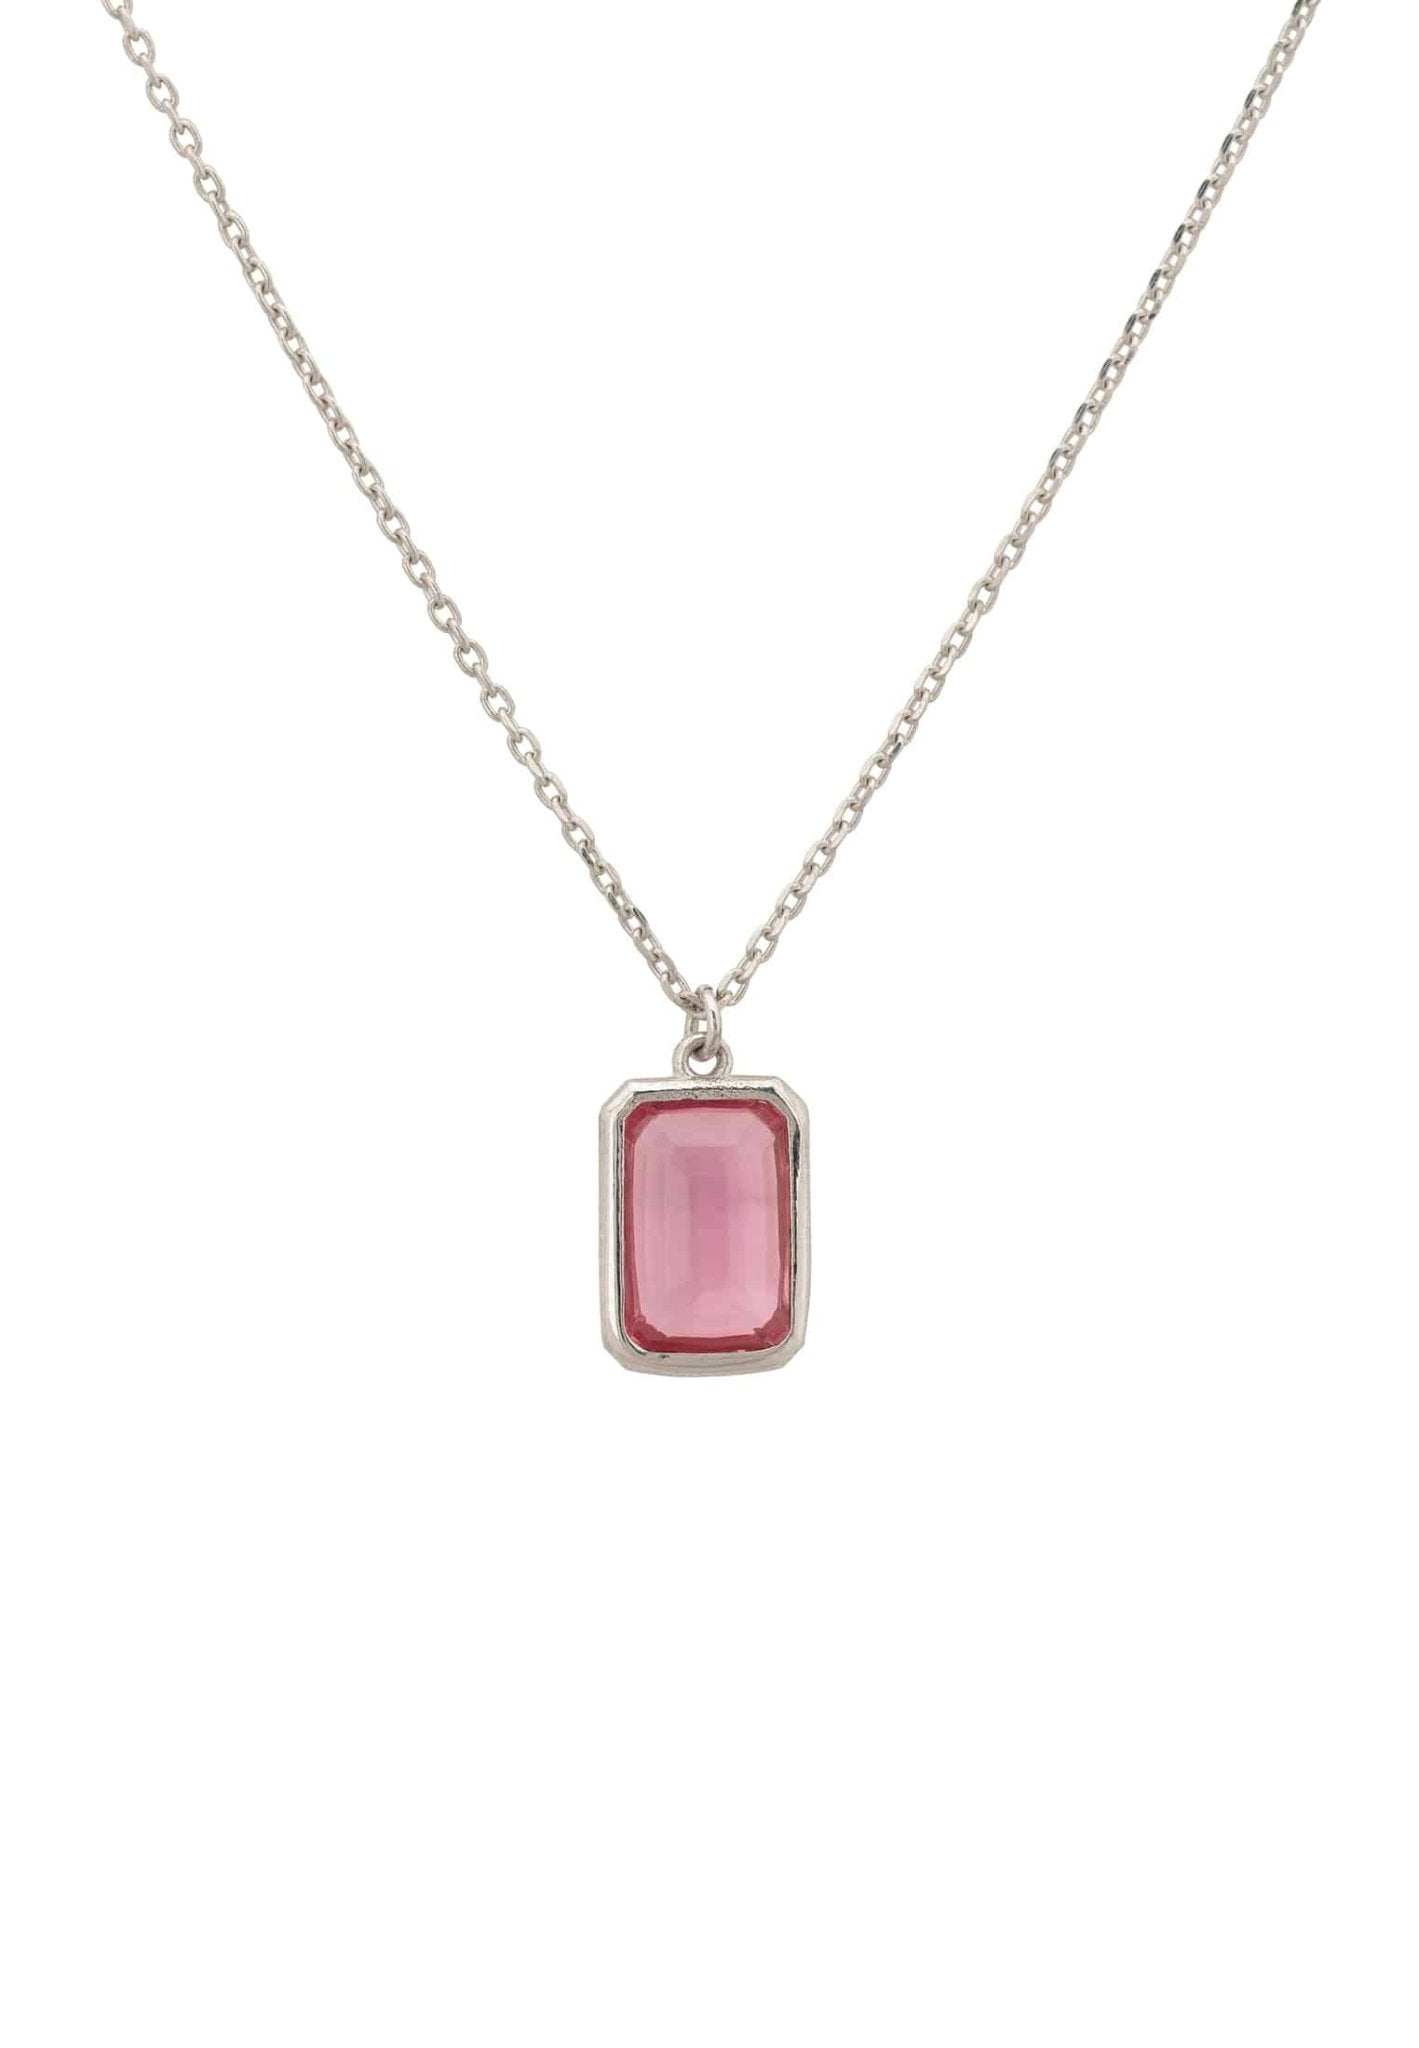 Portofino Necklace Silver Pink Tourmaline - LATELITA Necklaces